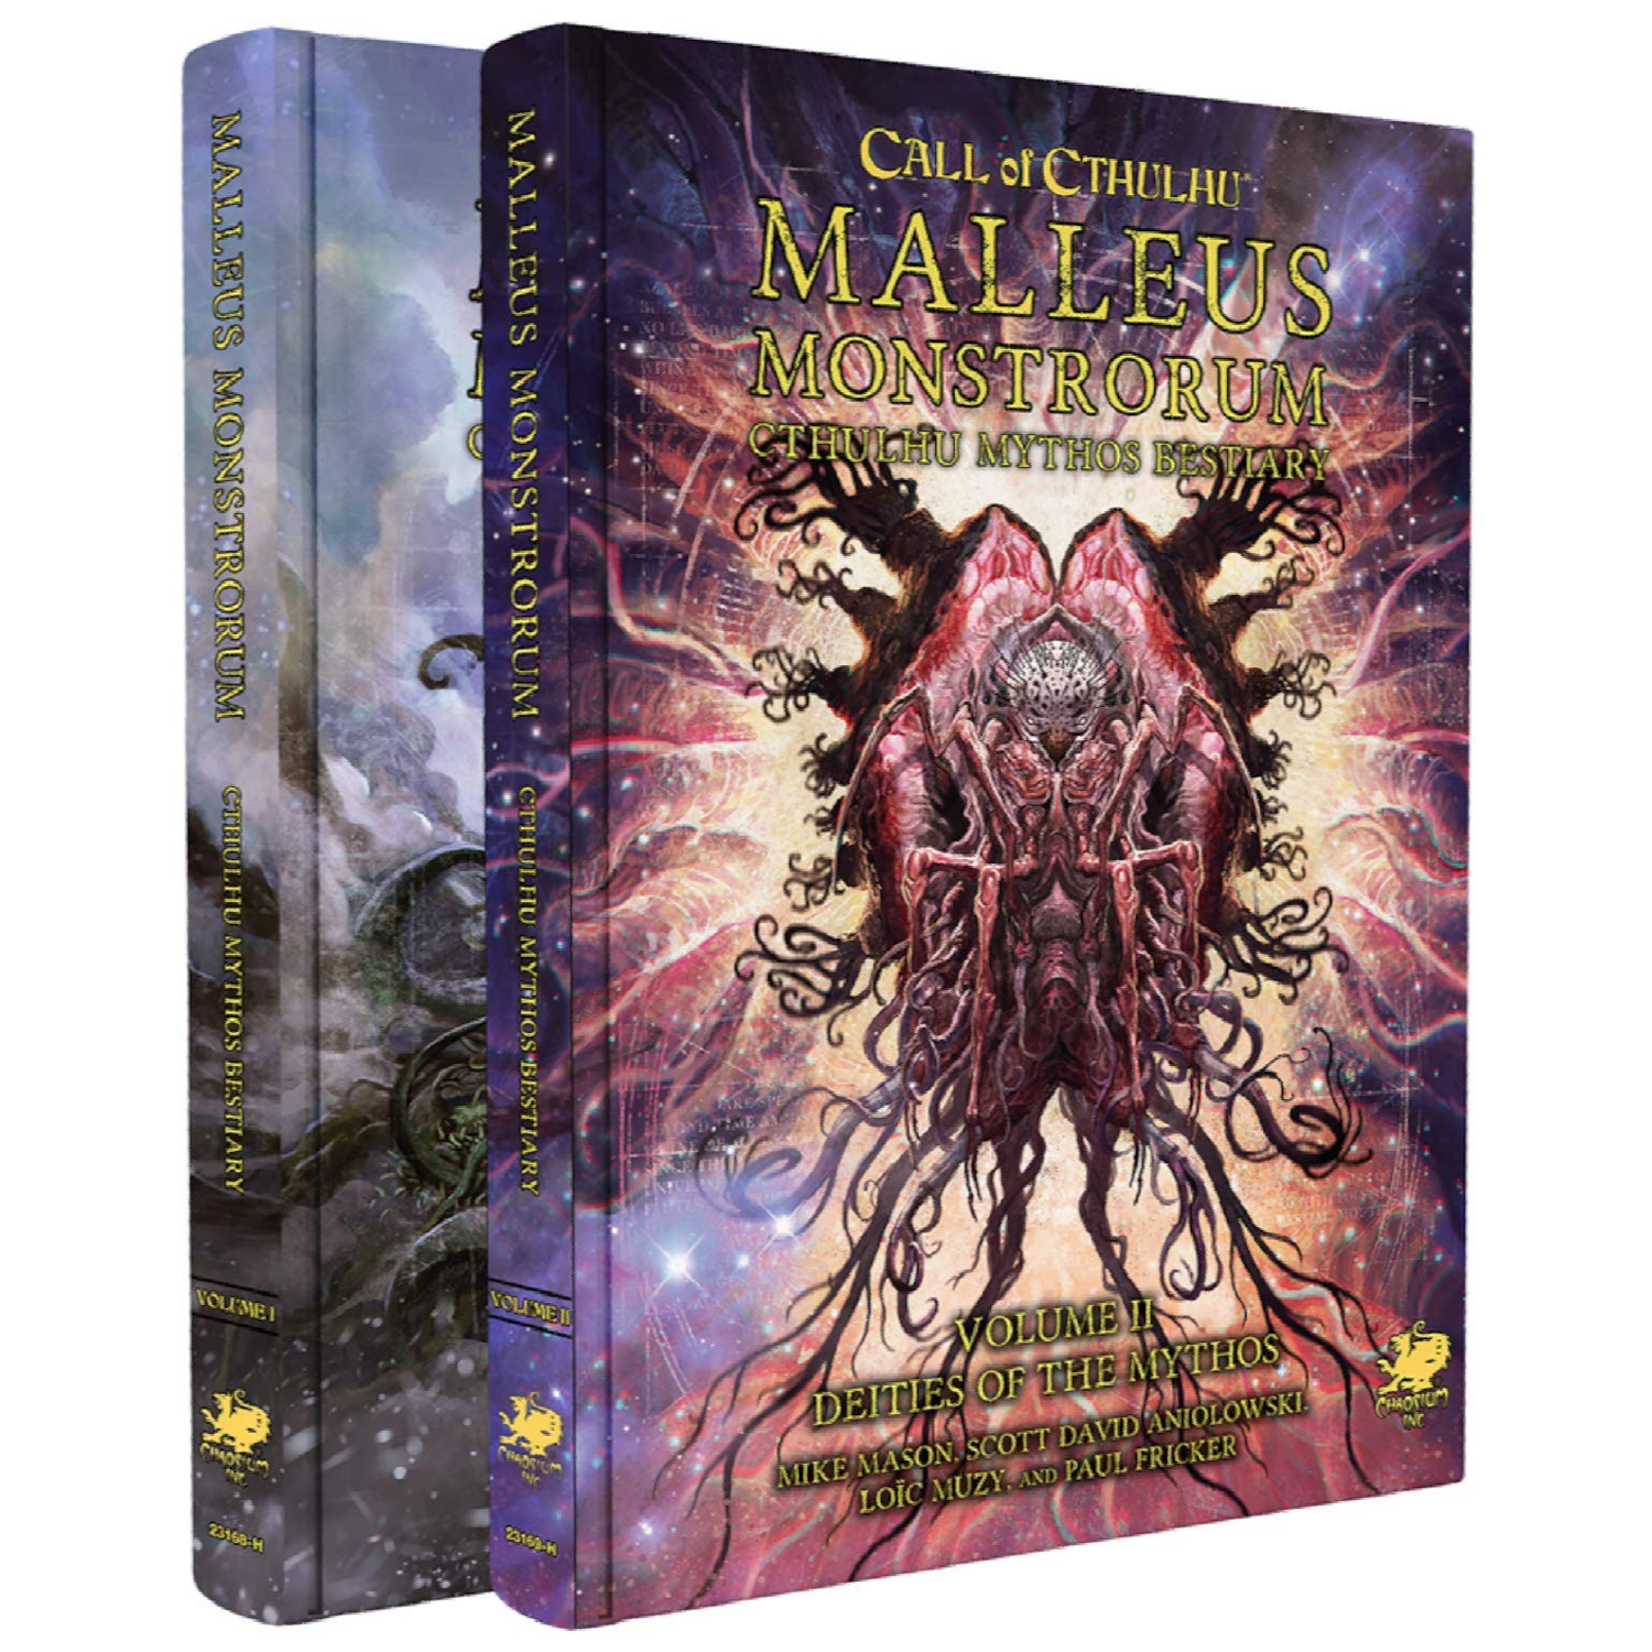 Chaosium Call of Cthulhu Malleus Monstrorum Cthulhu Mythos Bestiary Two Volume Slipcase Set